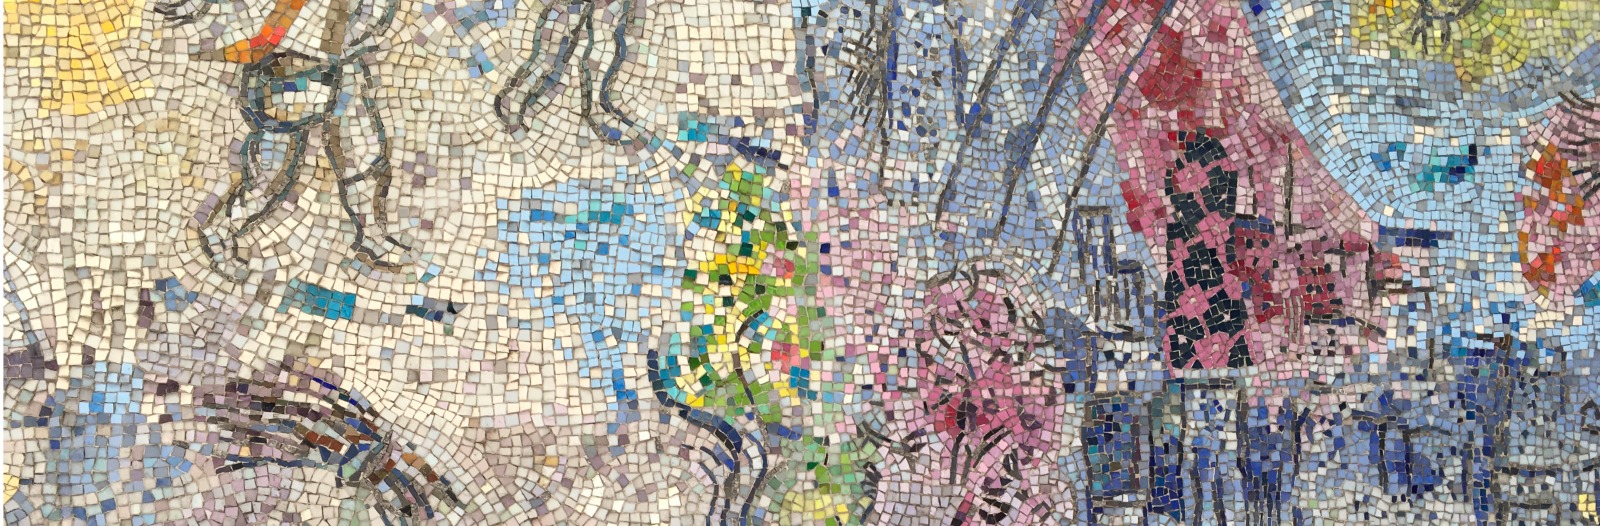 Chicago Art Tour mosaic